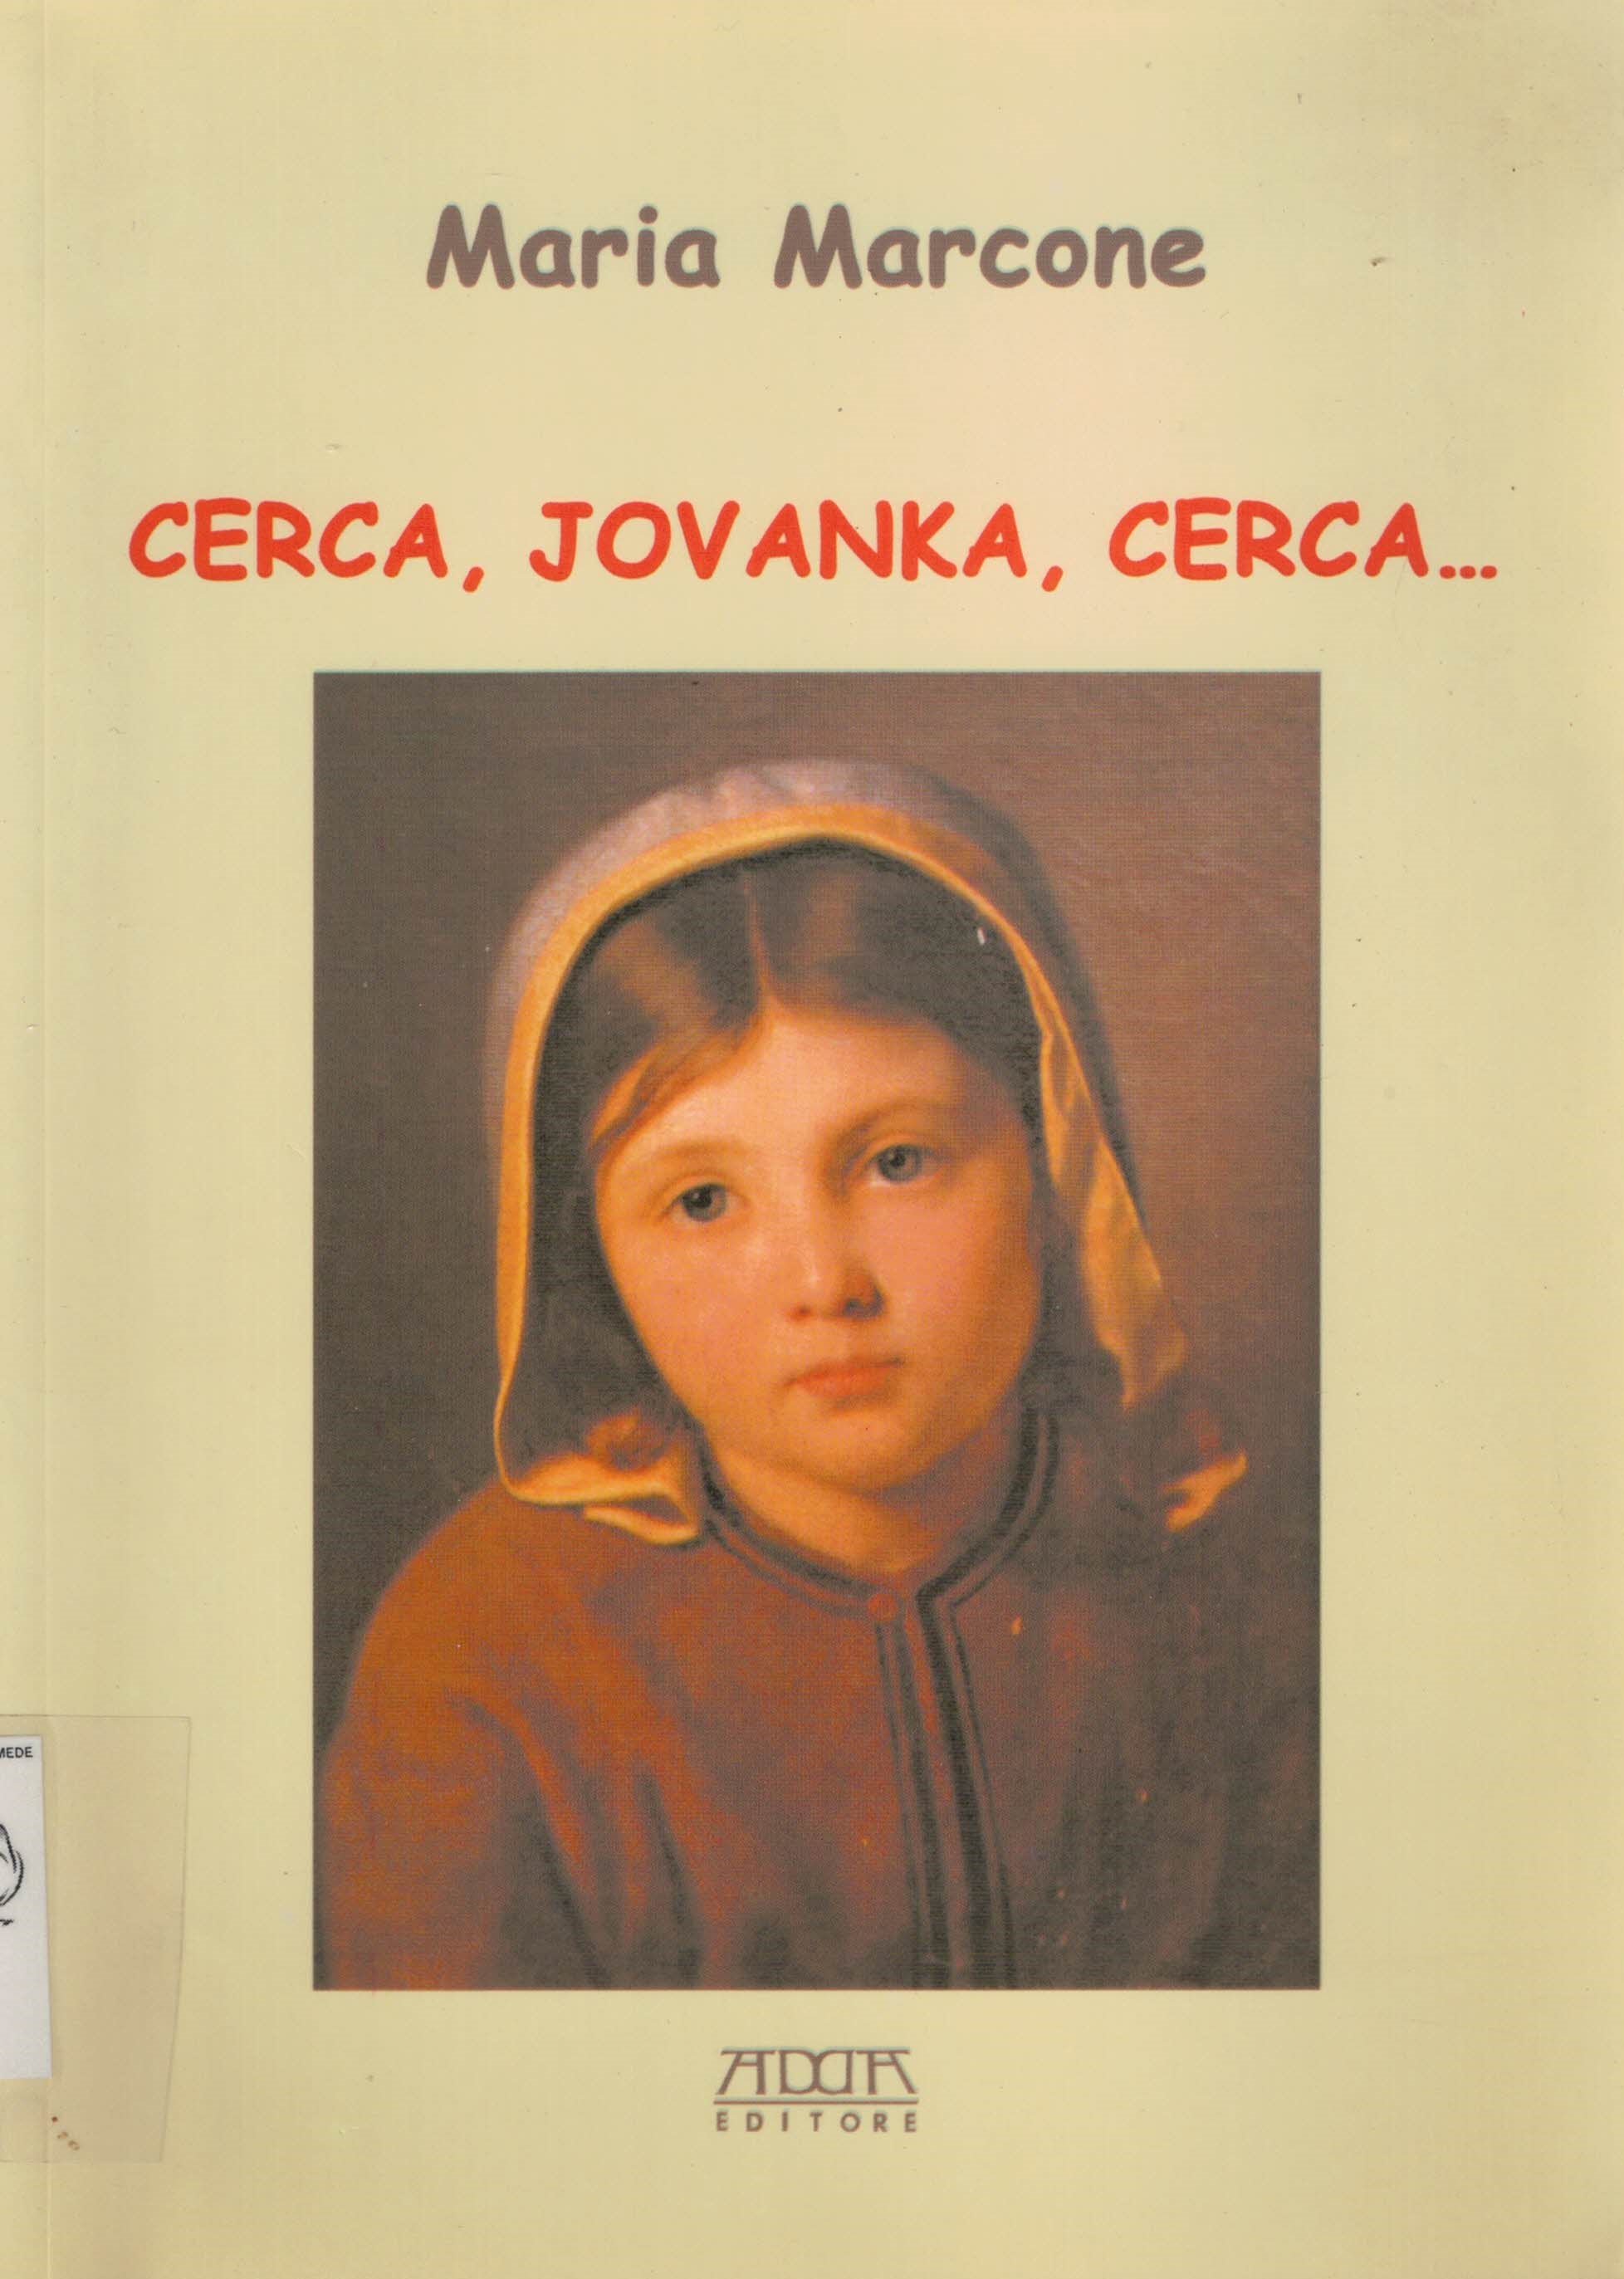 Copertina di Cerca, Jovanka, cerca...